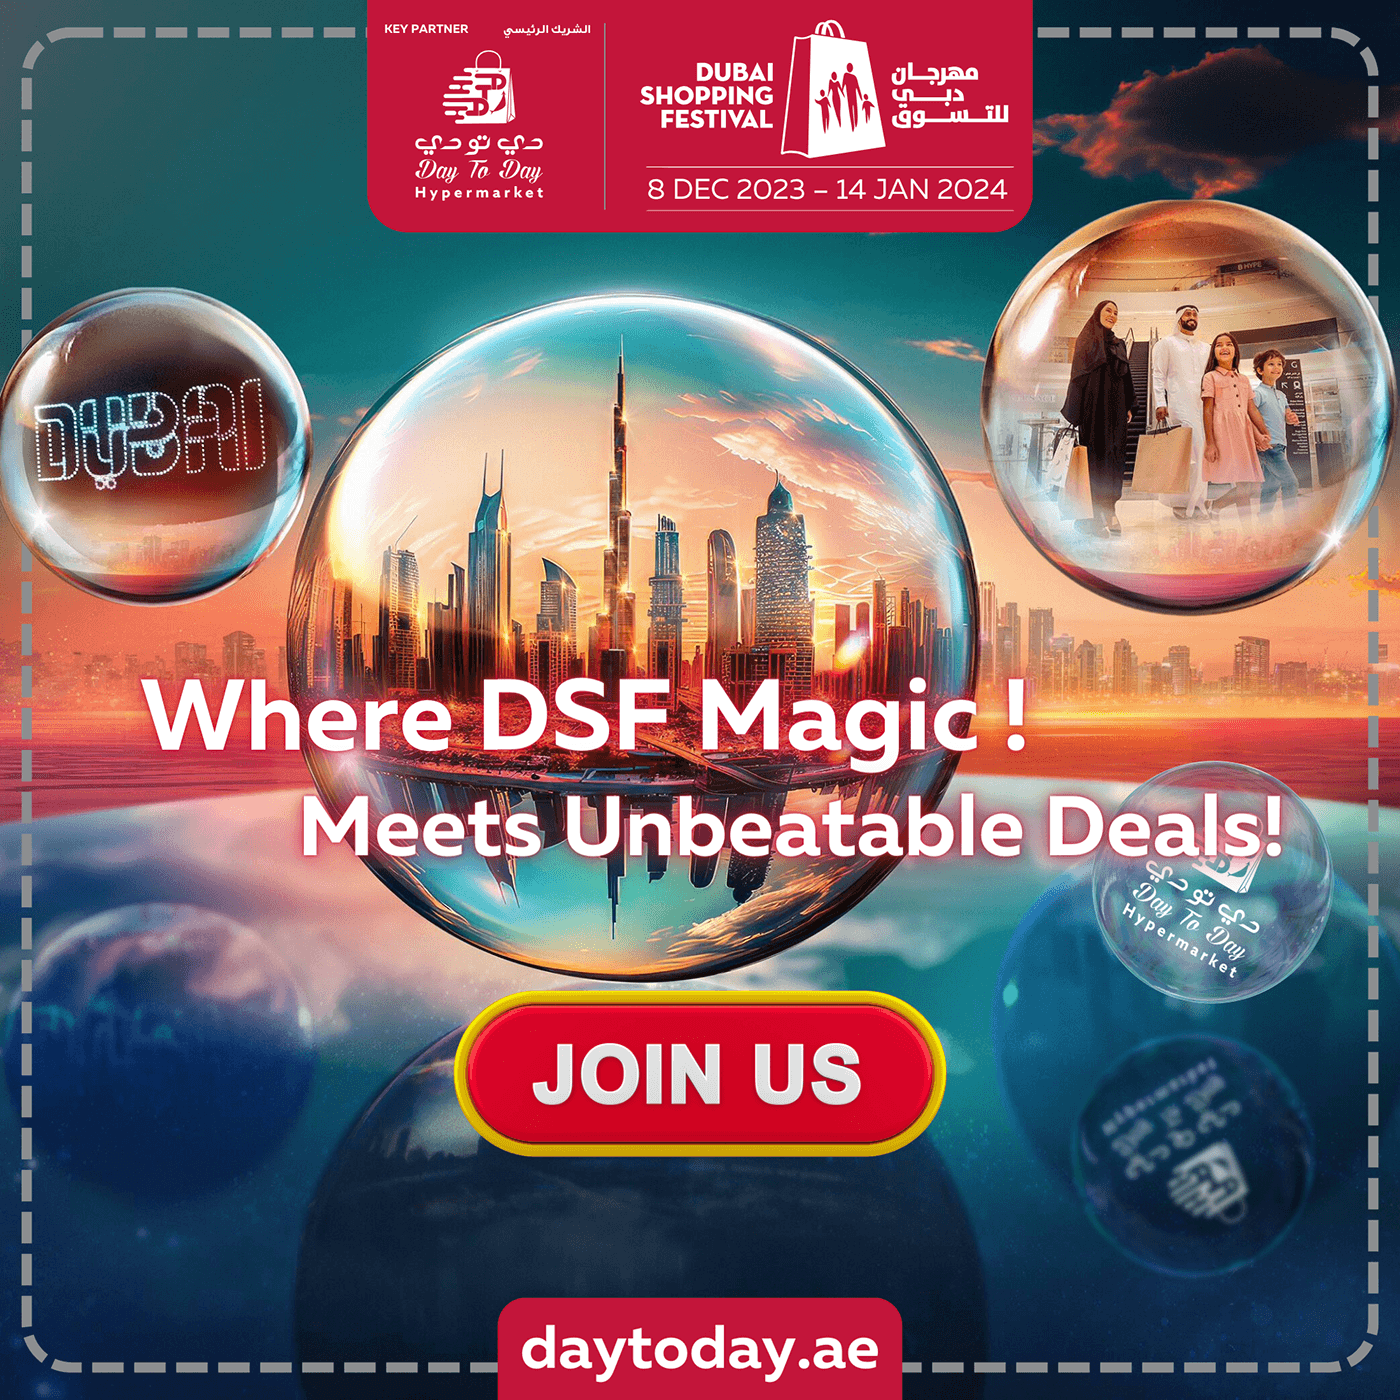 Dubai Shopping Festival dubai Instagram Post social media designer graphic graphic design  Digital Art  DSF dubai festival